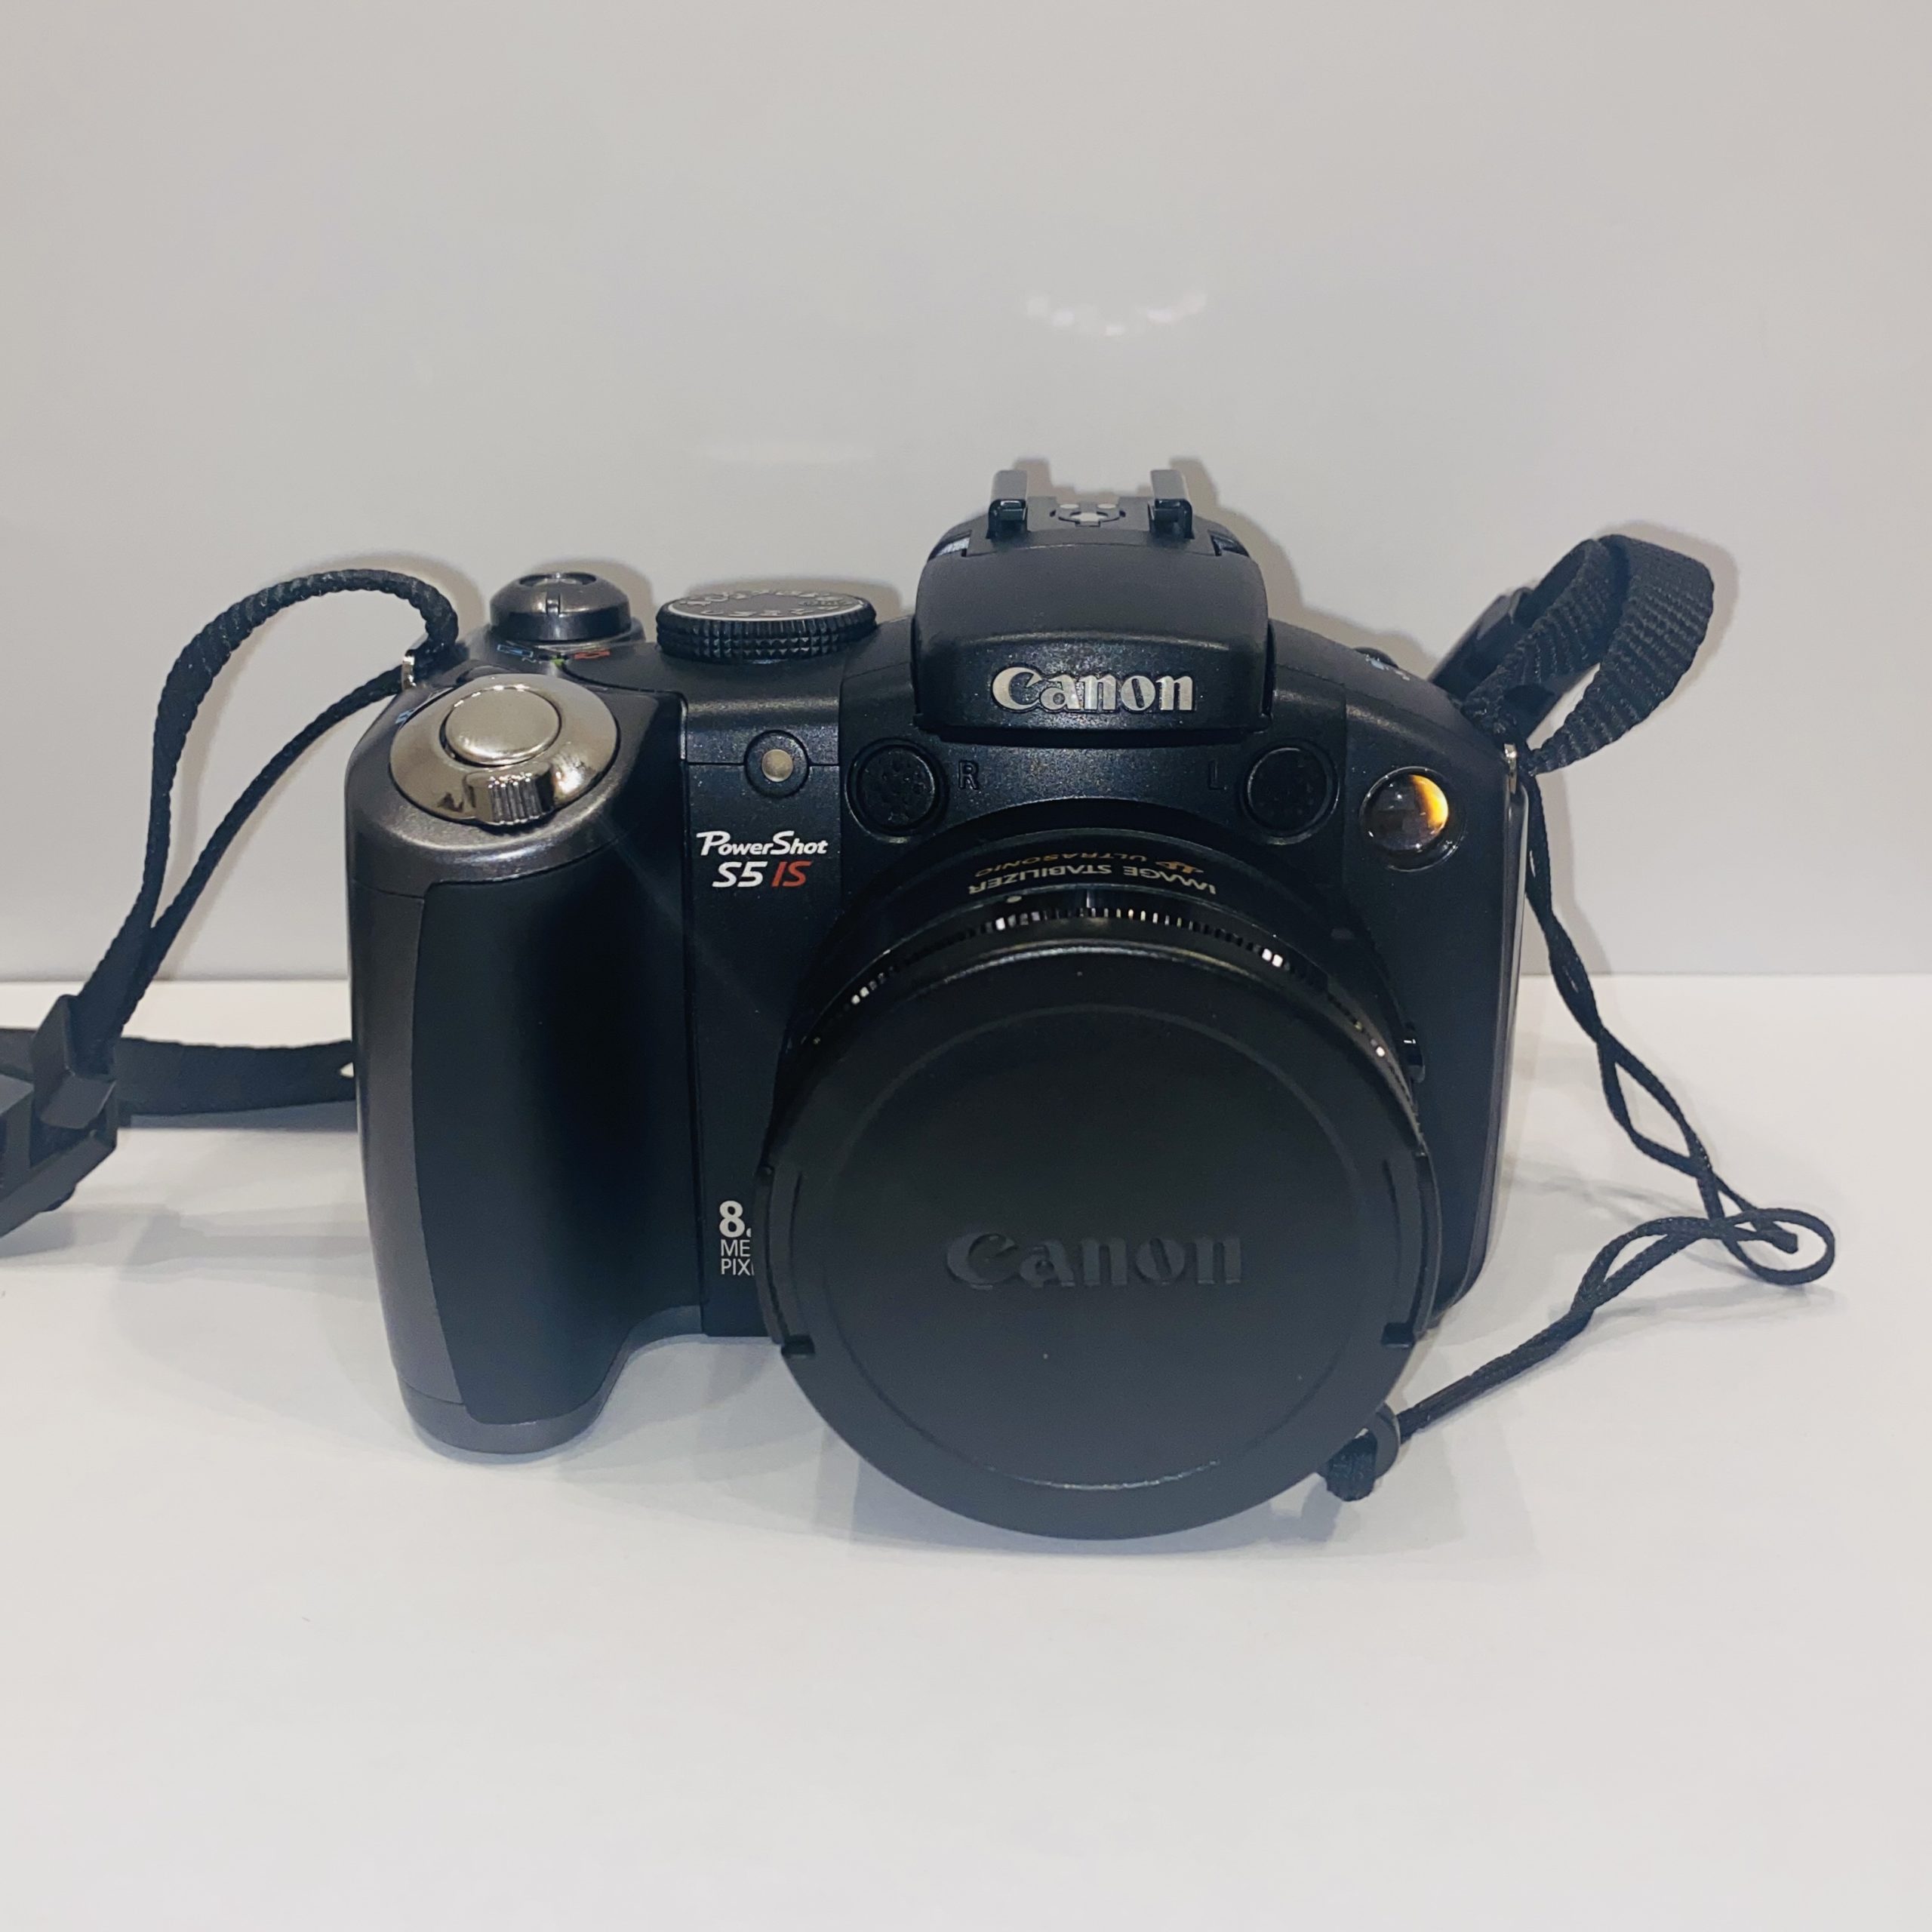 【Canon/キャノン】Power Shot/パワーショット S5 IS カメラ 6.0-72.0mm 1:2.7-3.5